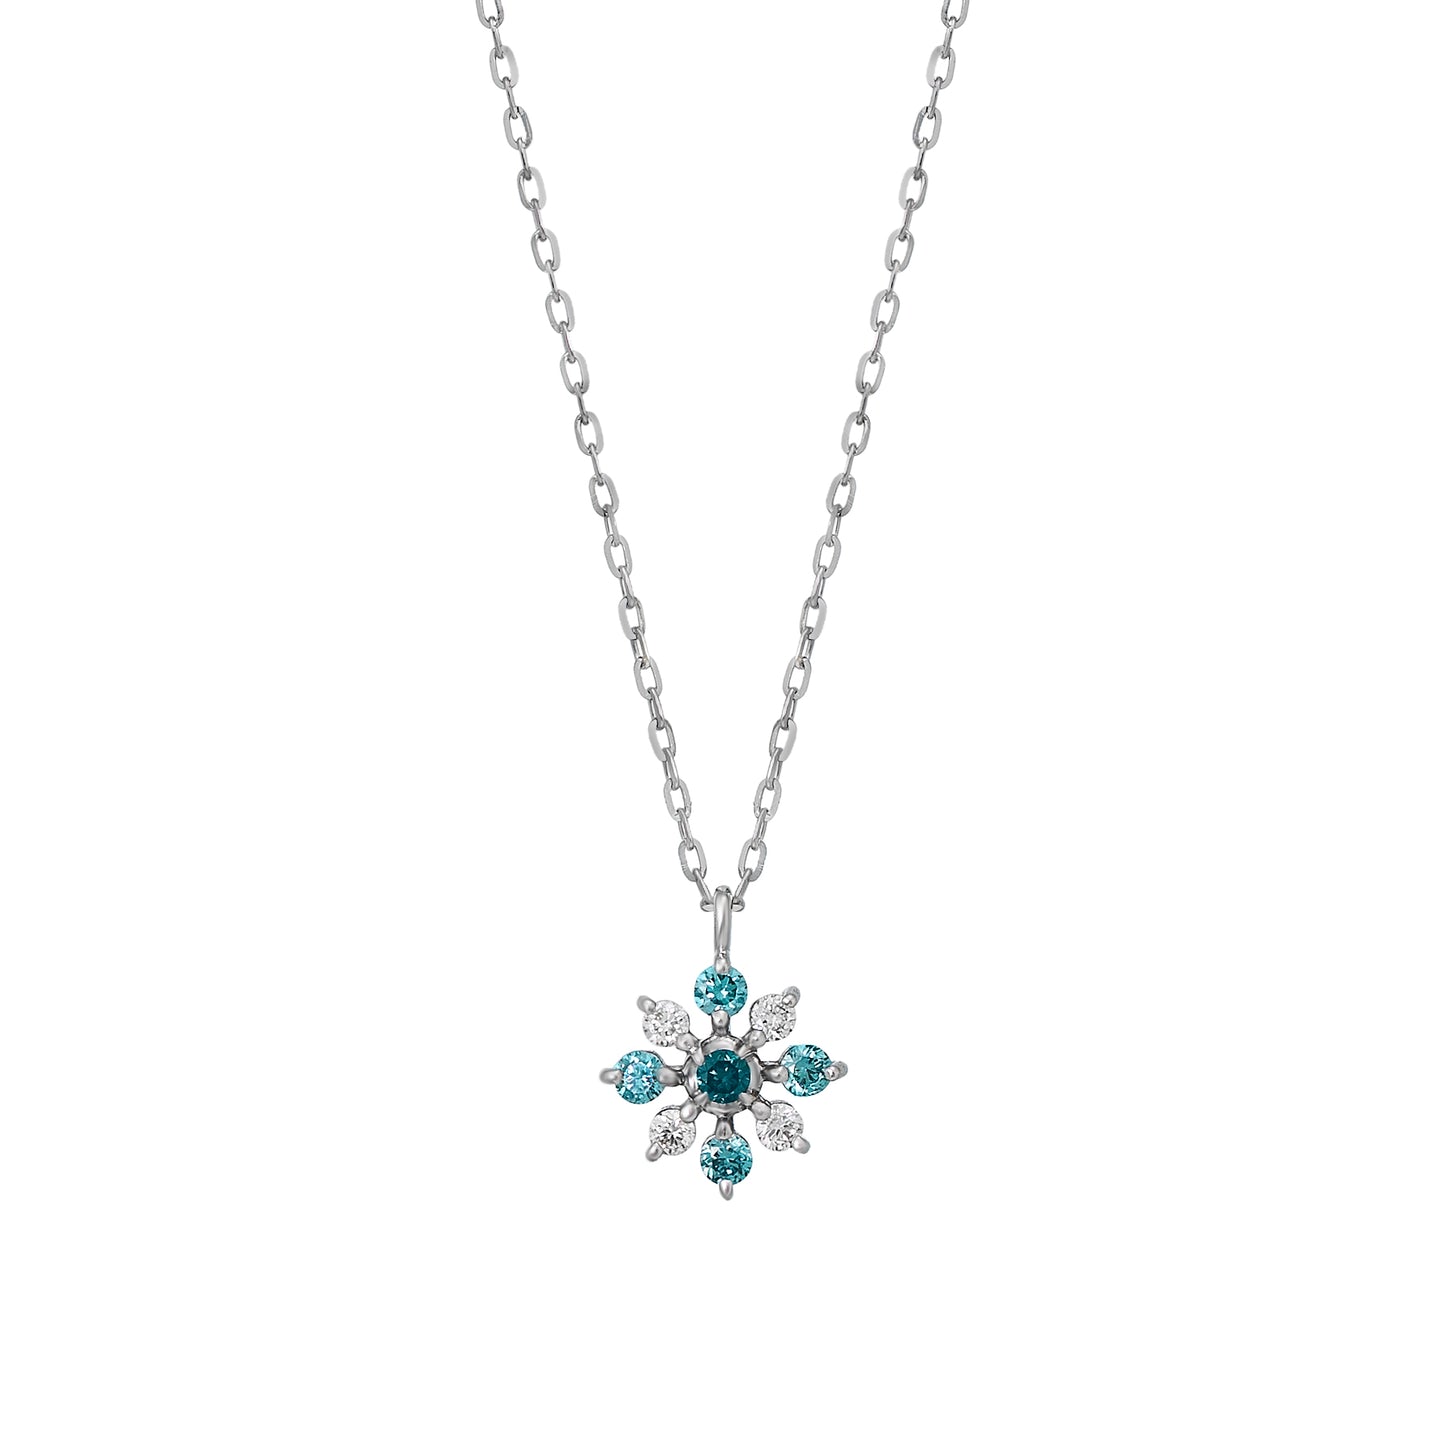 10K White Gold Diamond Gradation Sparkle Design Necklace - Product Image